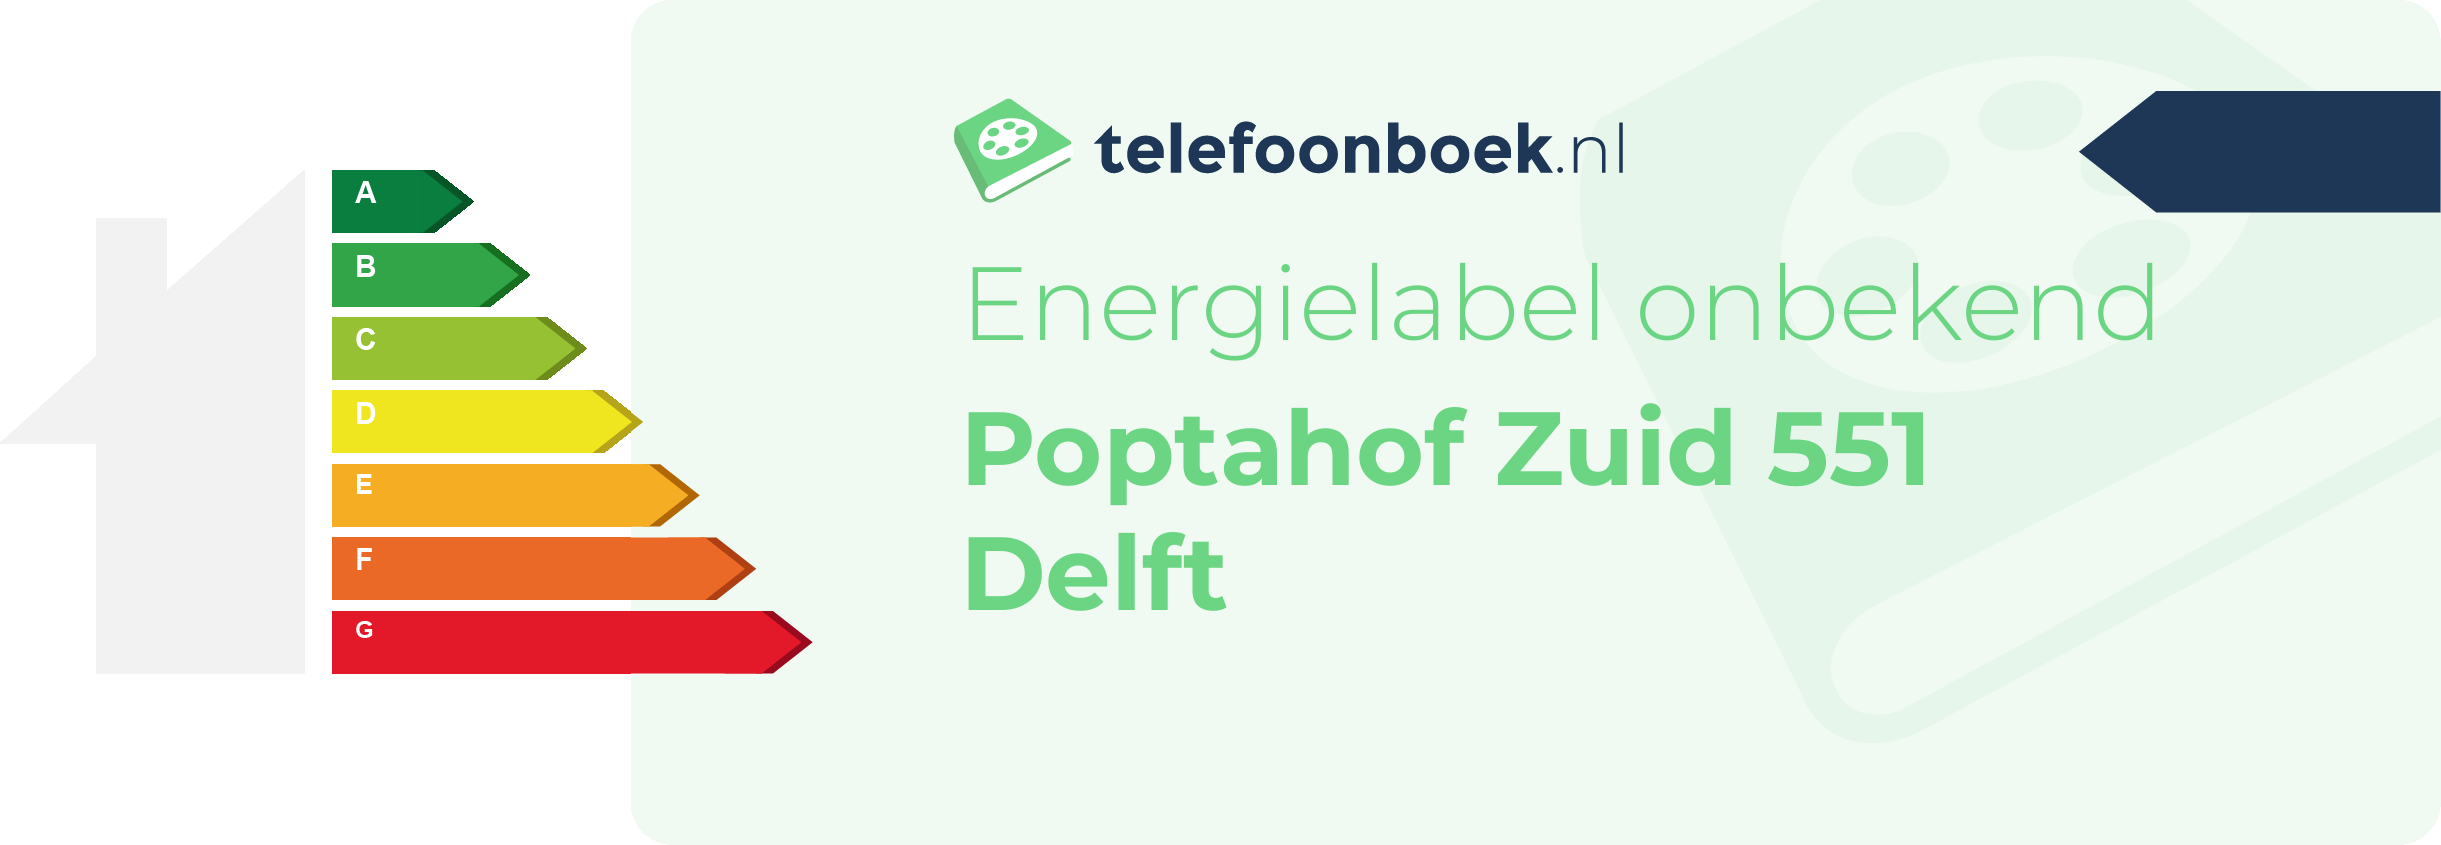 Energielabel Poptahof Zuid 551 Delft